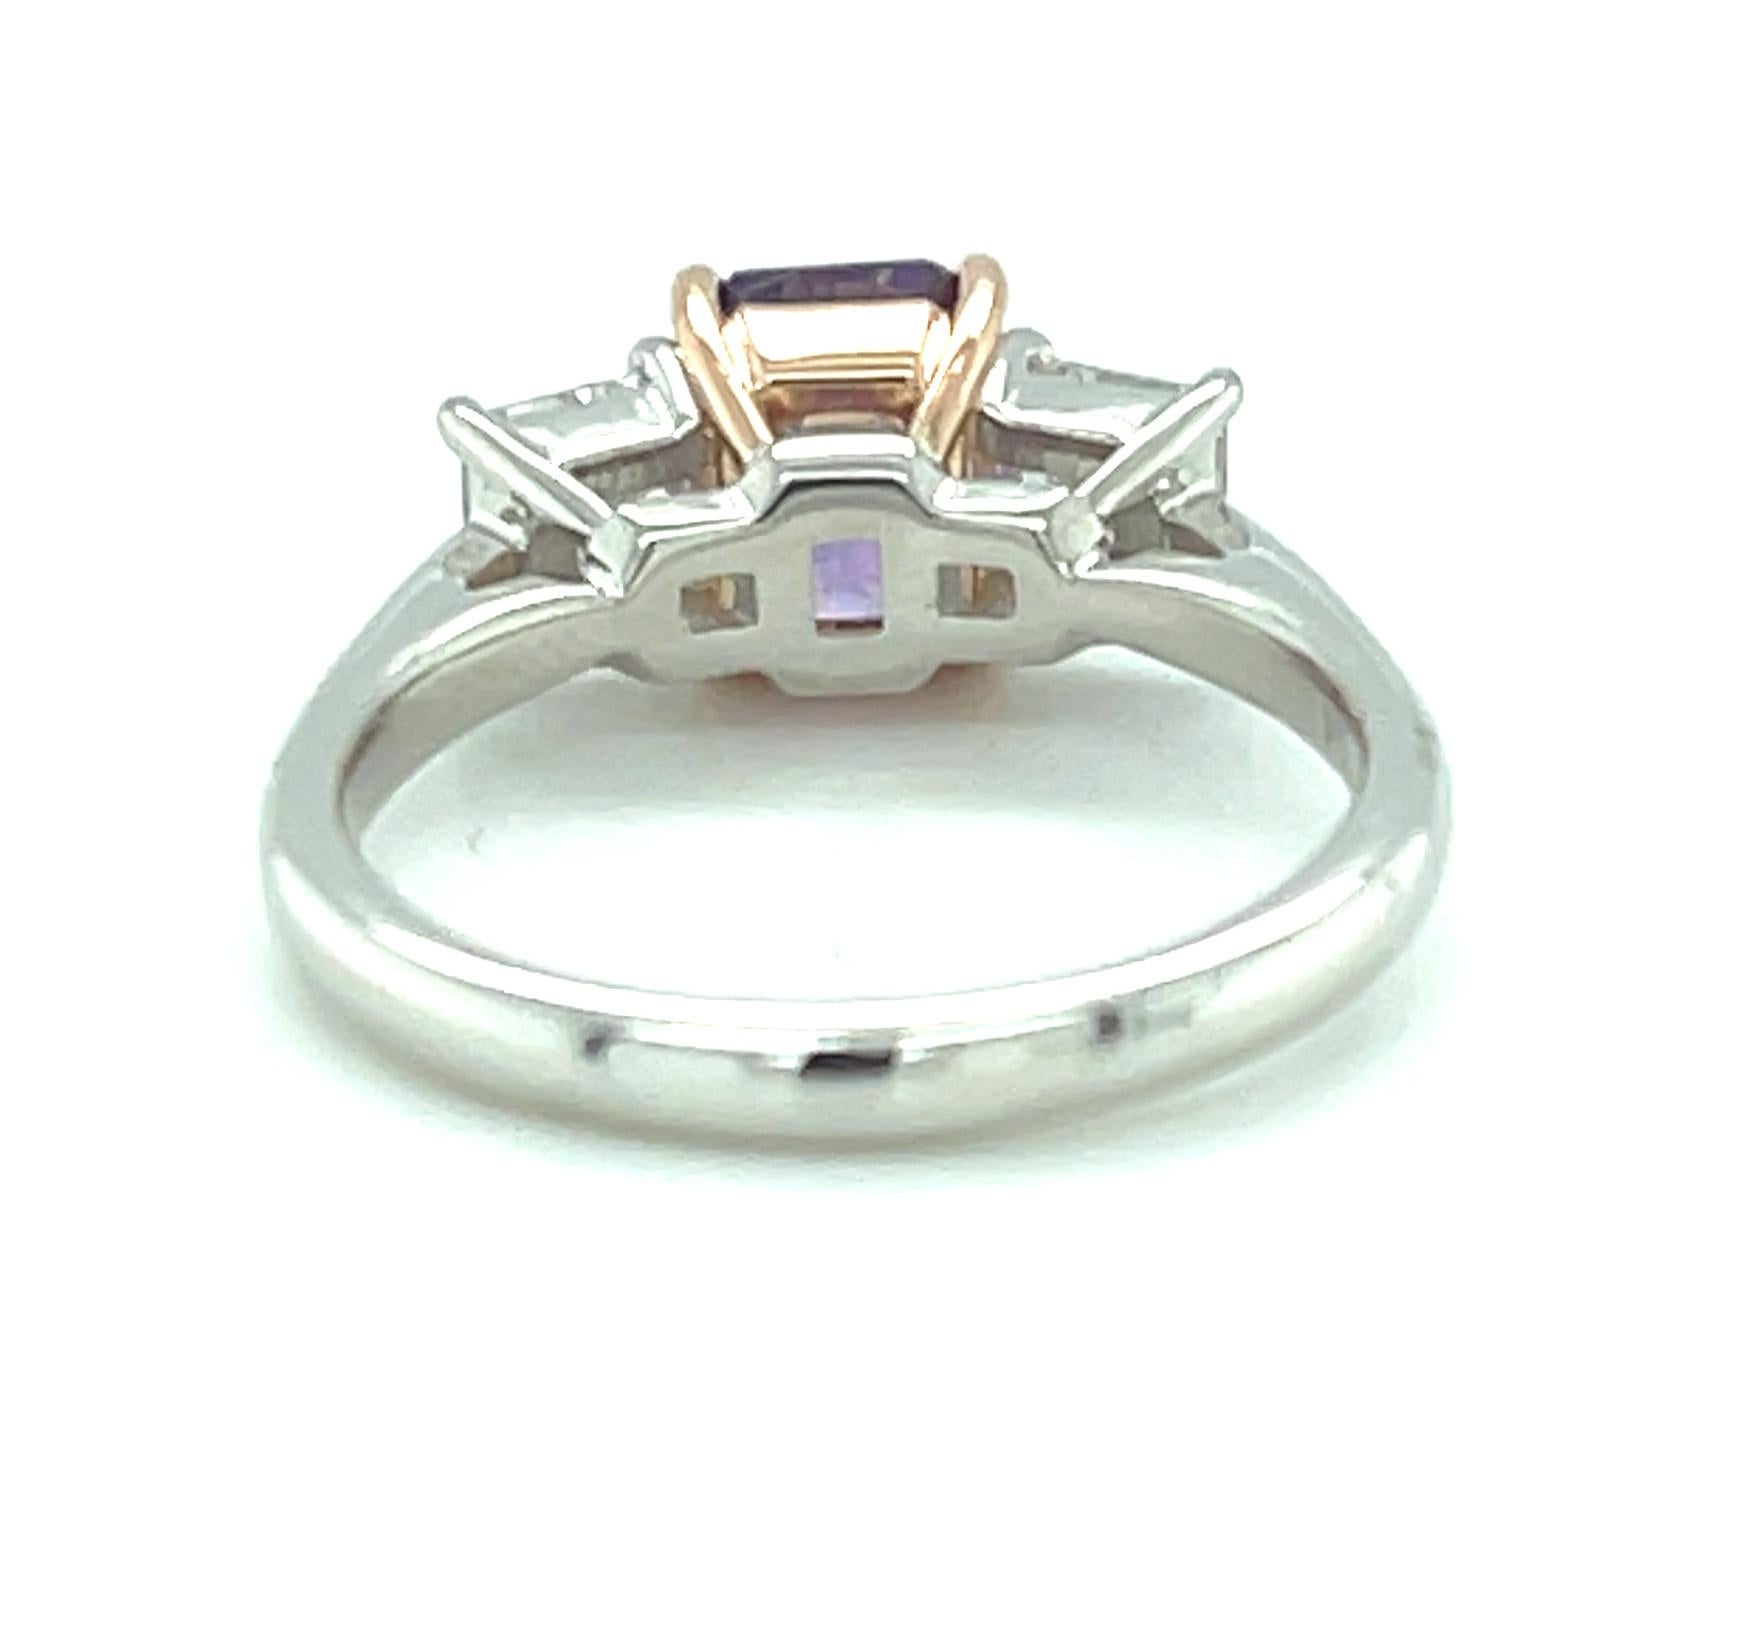 real purple diamond ring